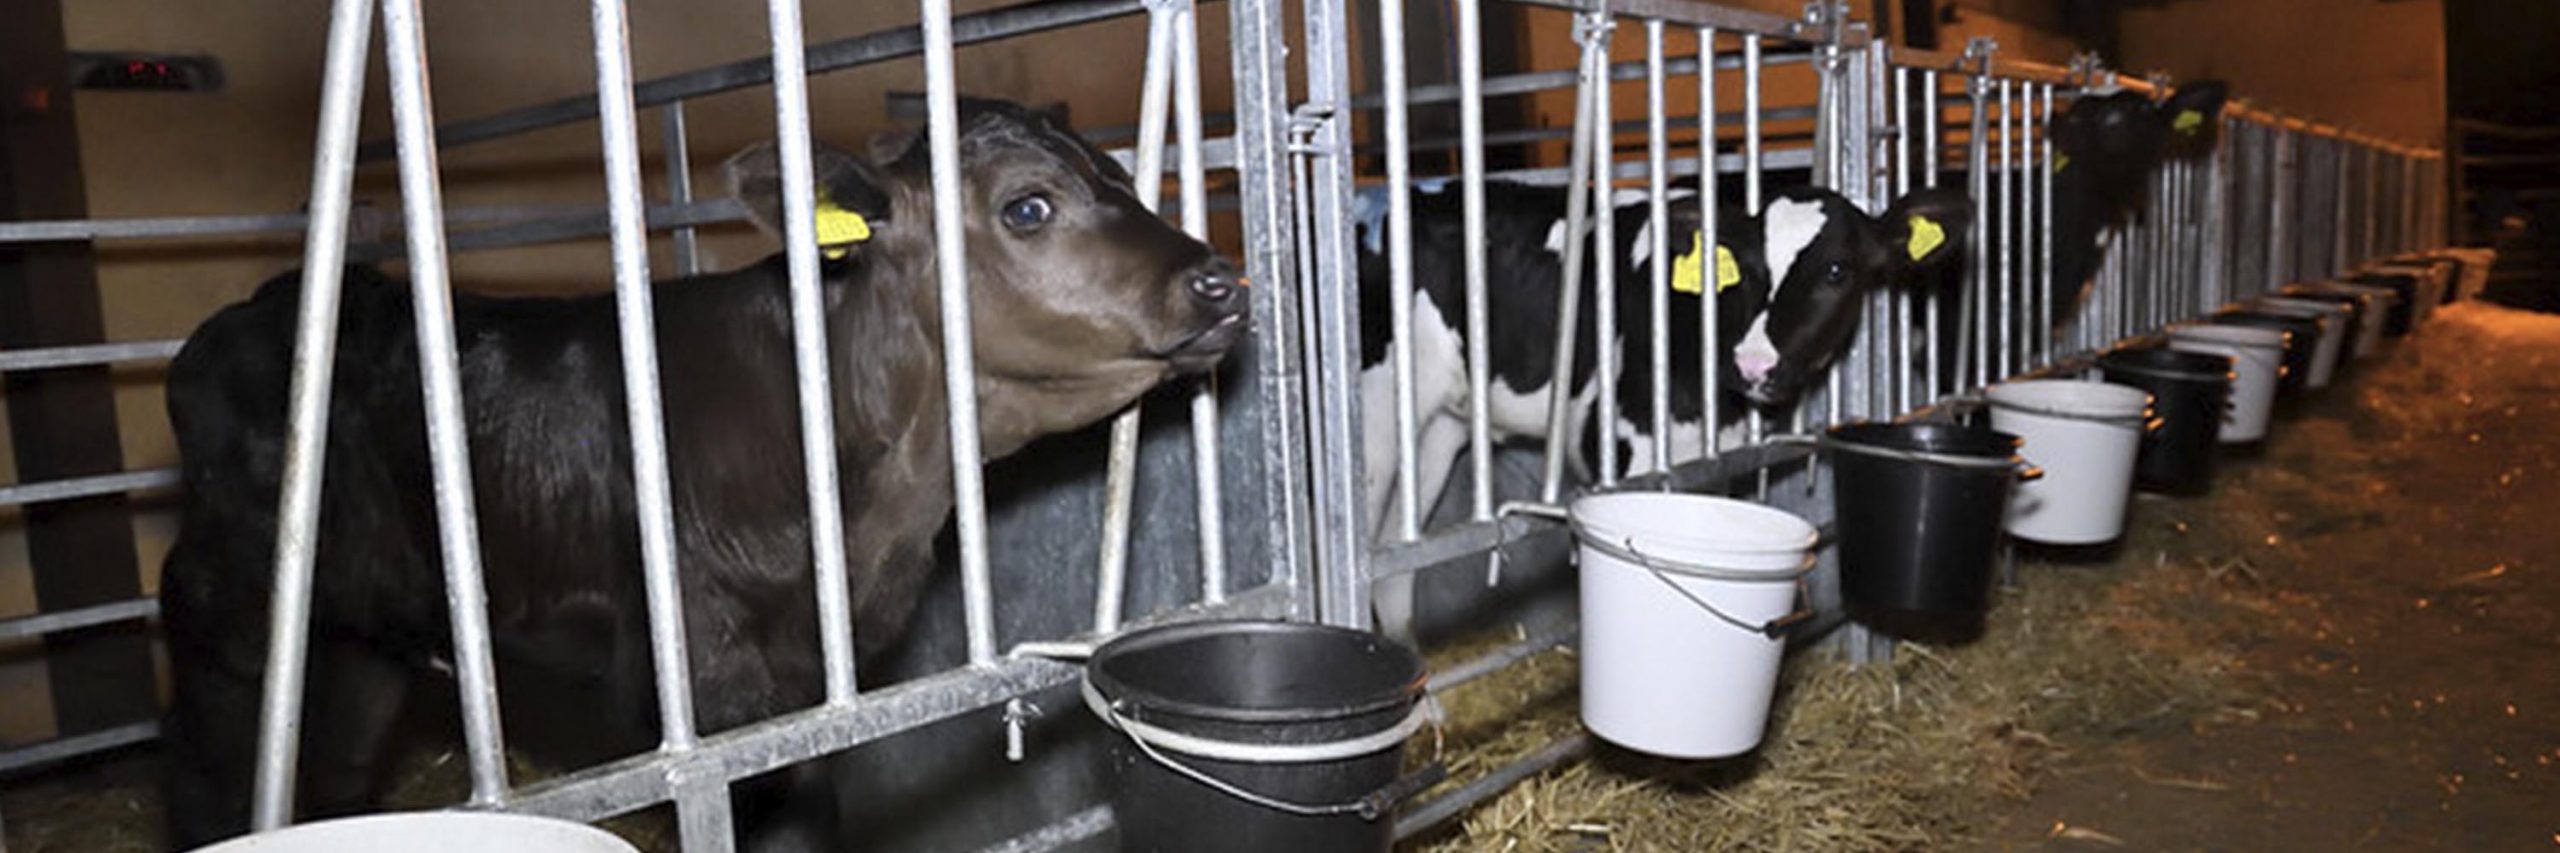 Product,Mammal,Fence,Dairy cow,Animal feed,farmed animal